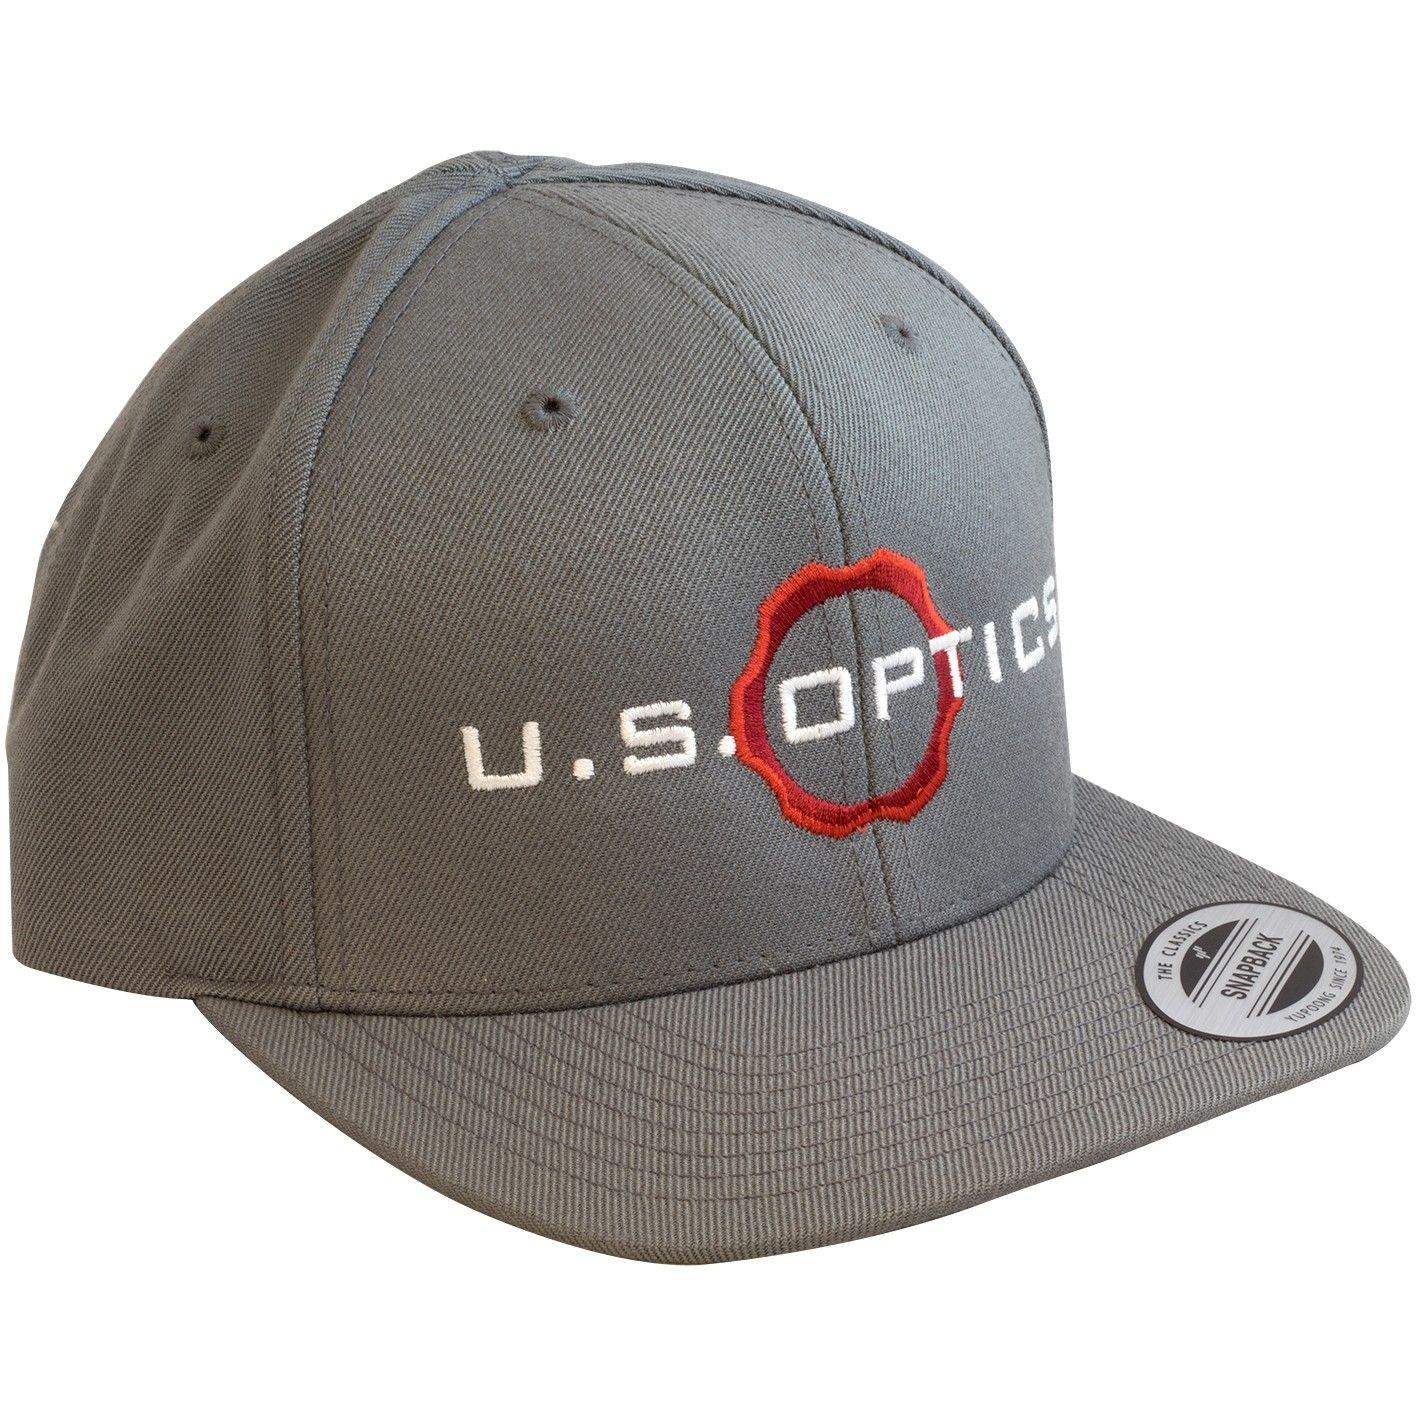 US Optics Logo - Buy U.S. Optics Classic Logo Snapbacks at SWFA.com